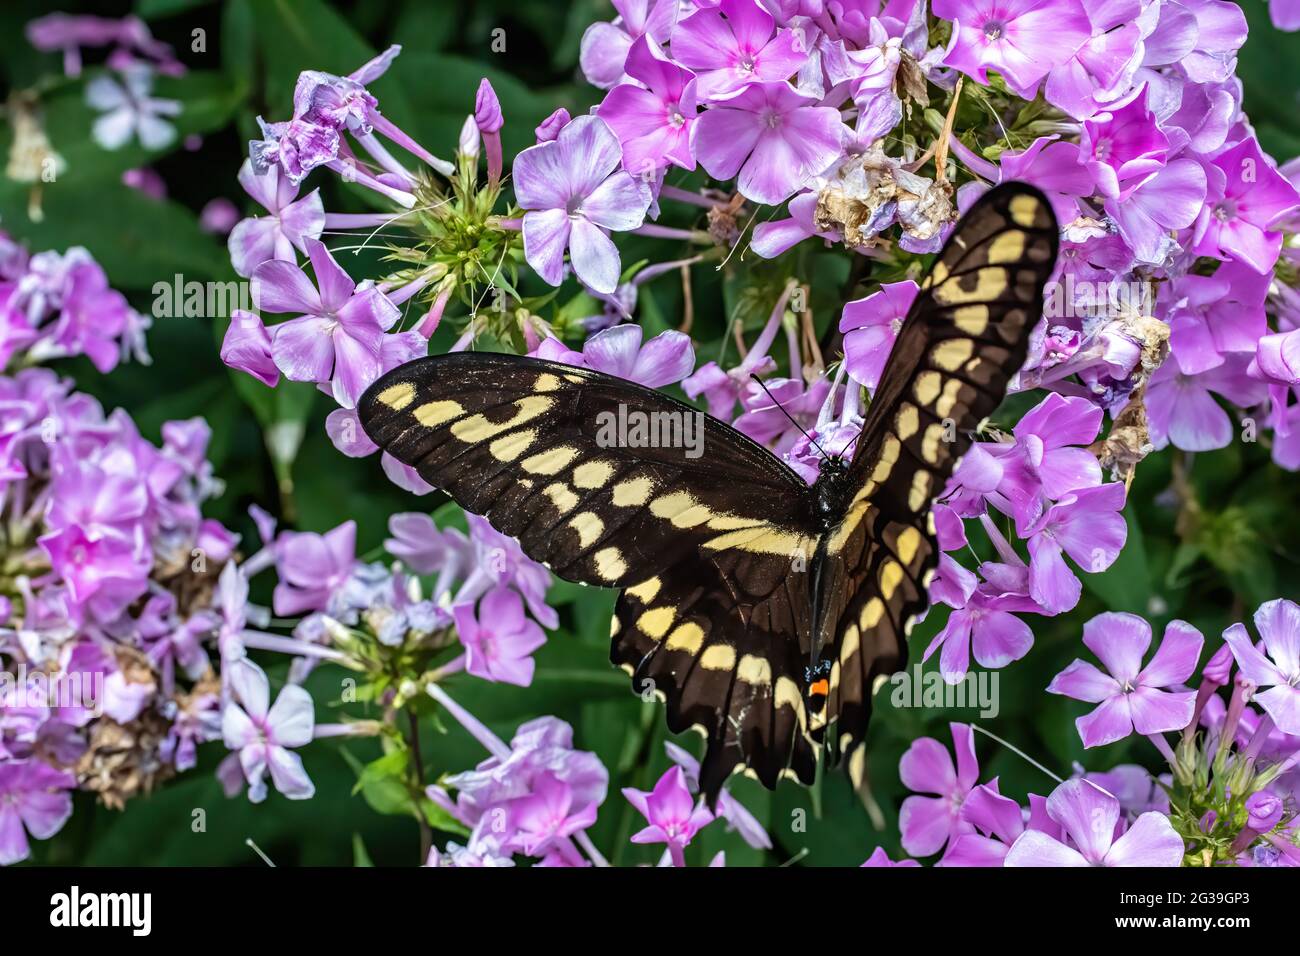 Anise Swallowtail on purple phlox flowers in a summer garden. Stock Photo